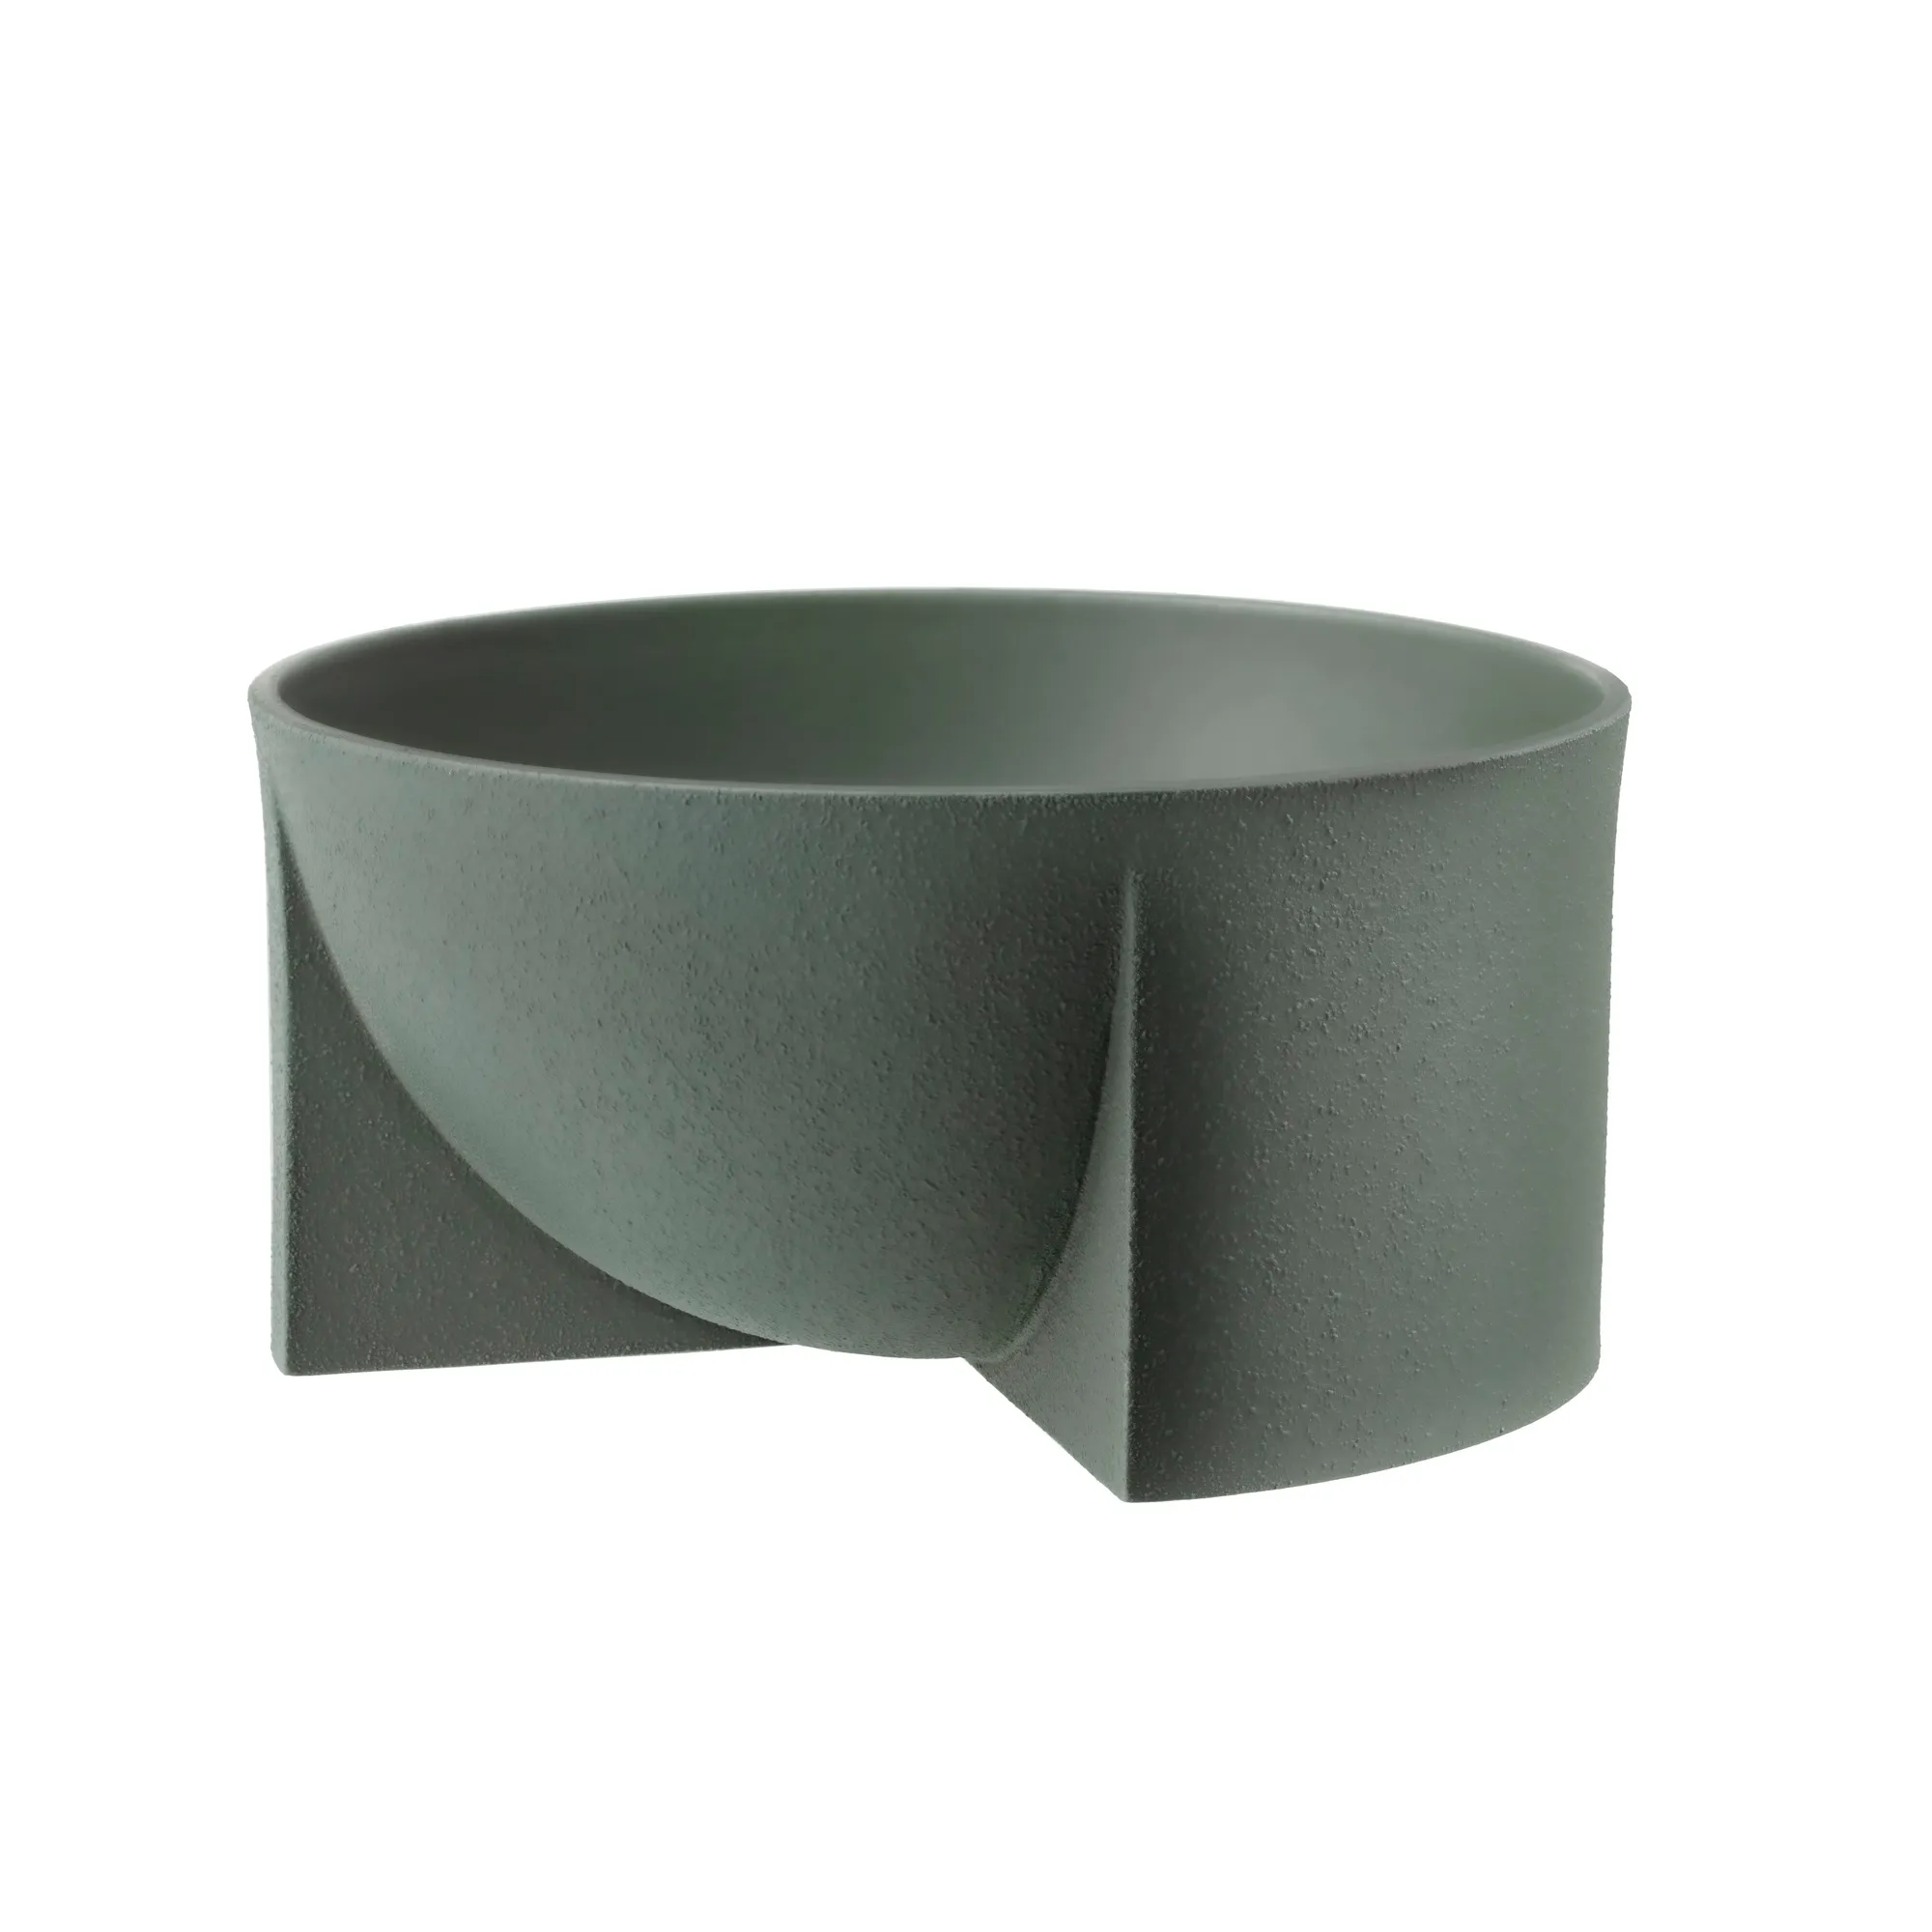 Kuru ceramic bowl Iittala 240 x 120 mm moss green